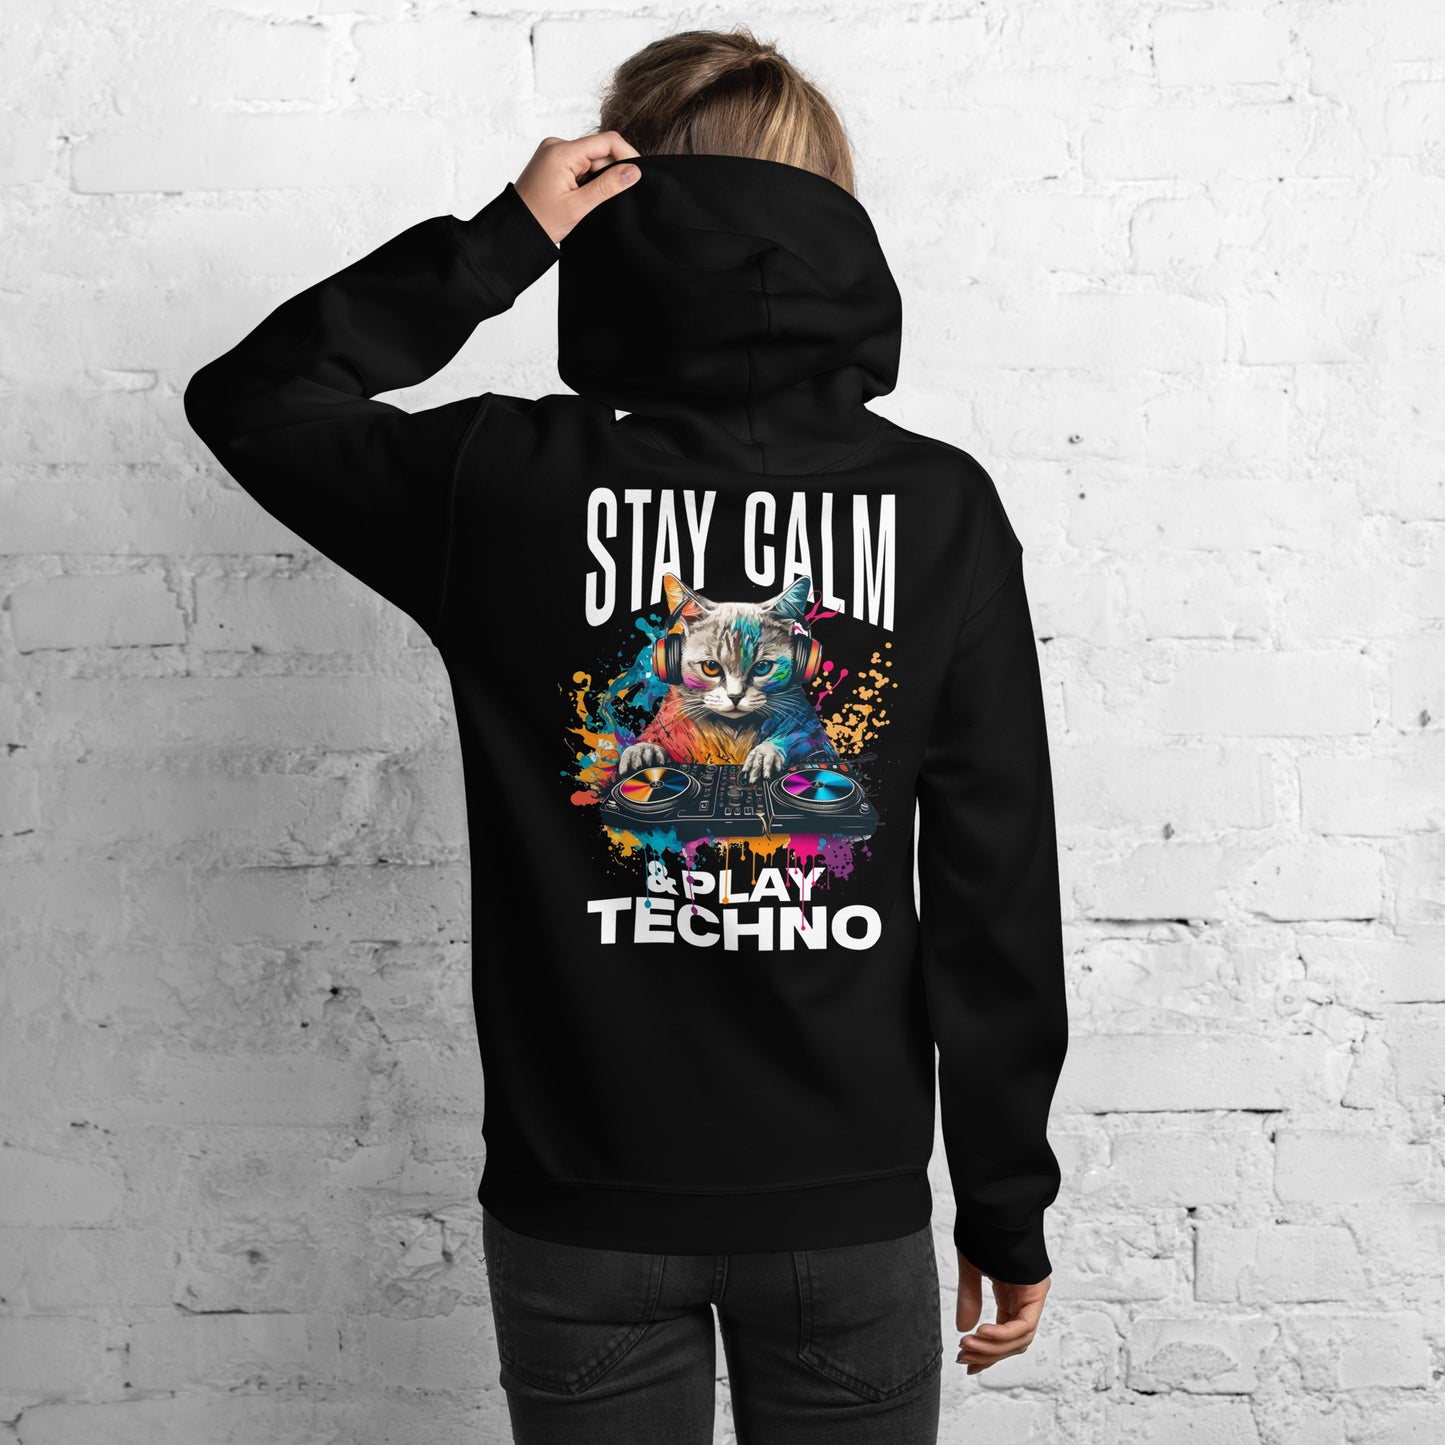 Stay Calm & Play Techno - Unisex Hoodie